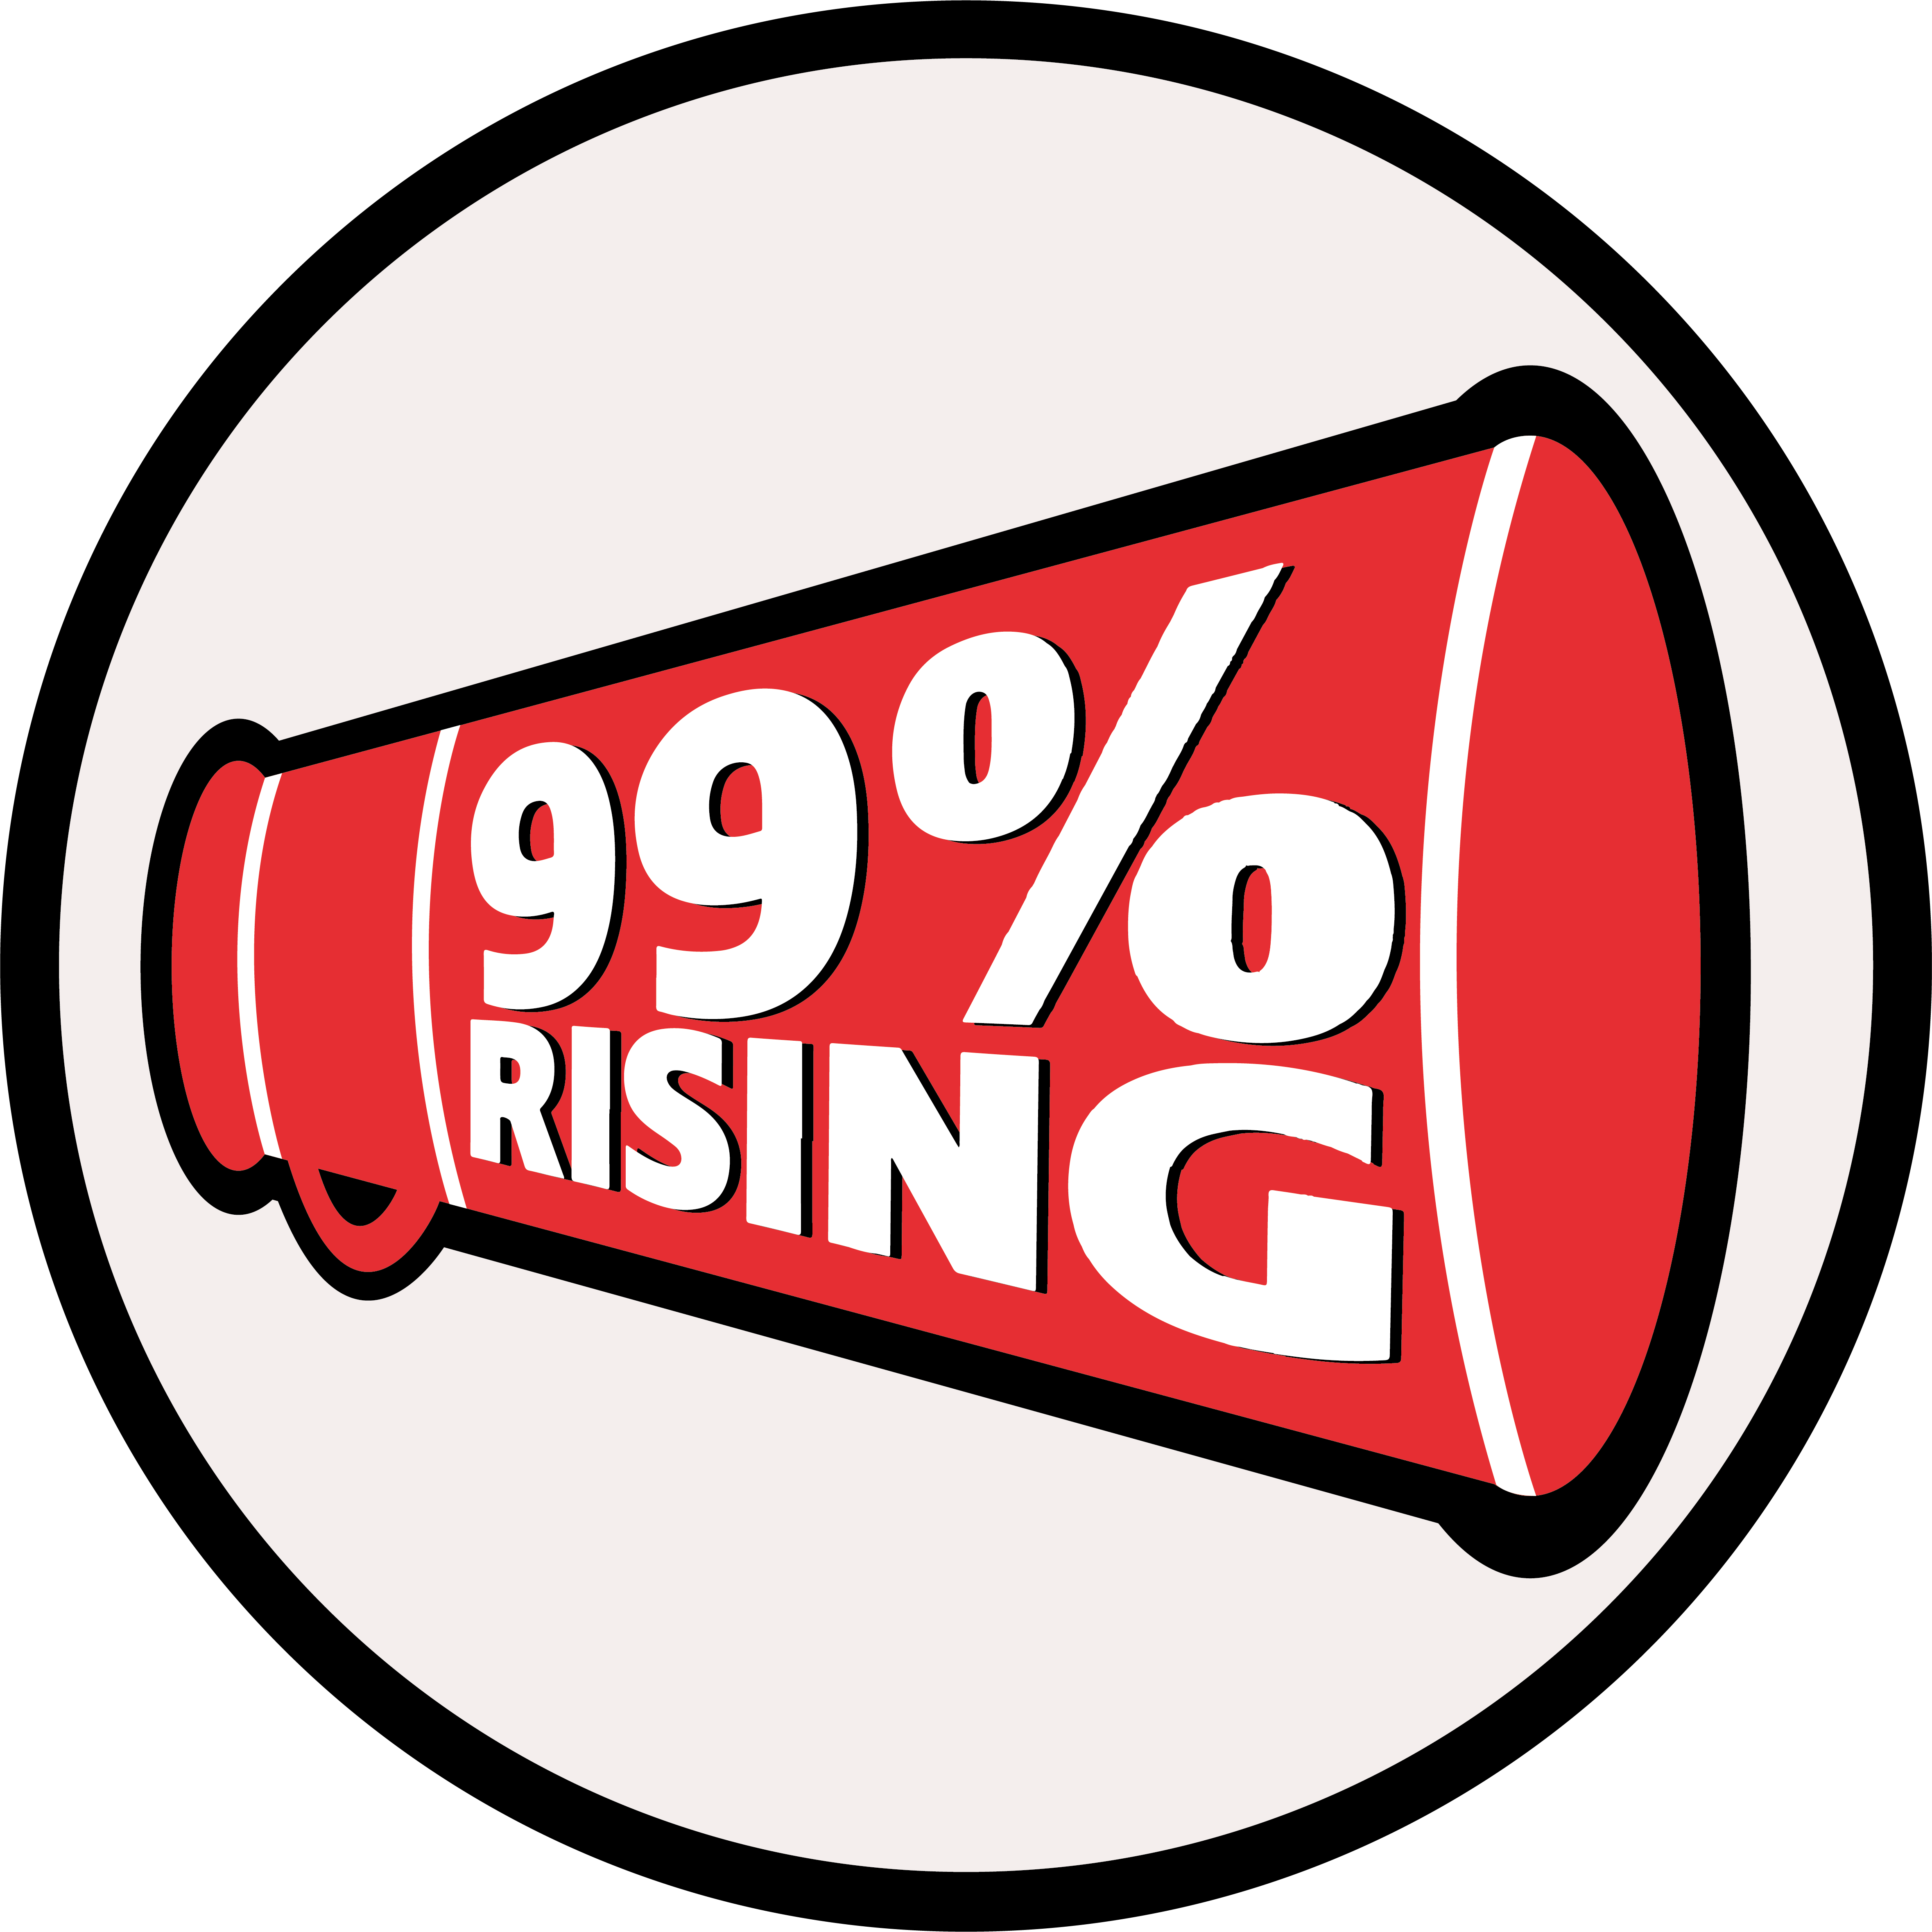 99% Rising